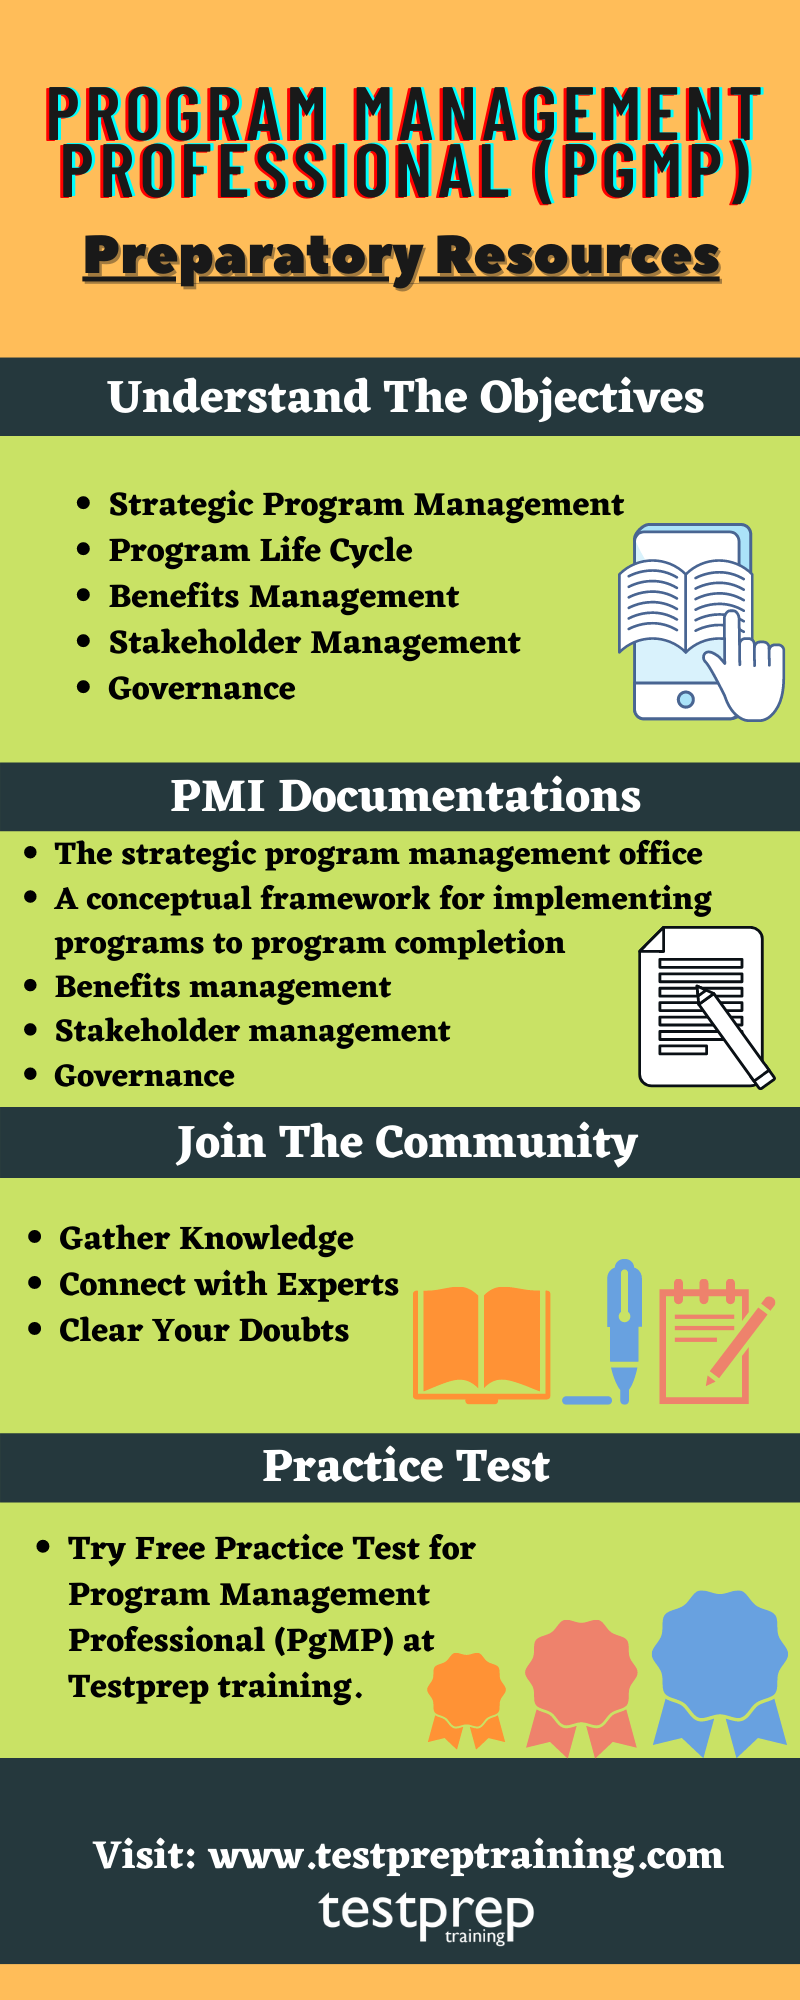 Program Management Professional (PgMP) - Testprep Training ...